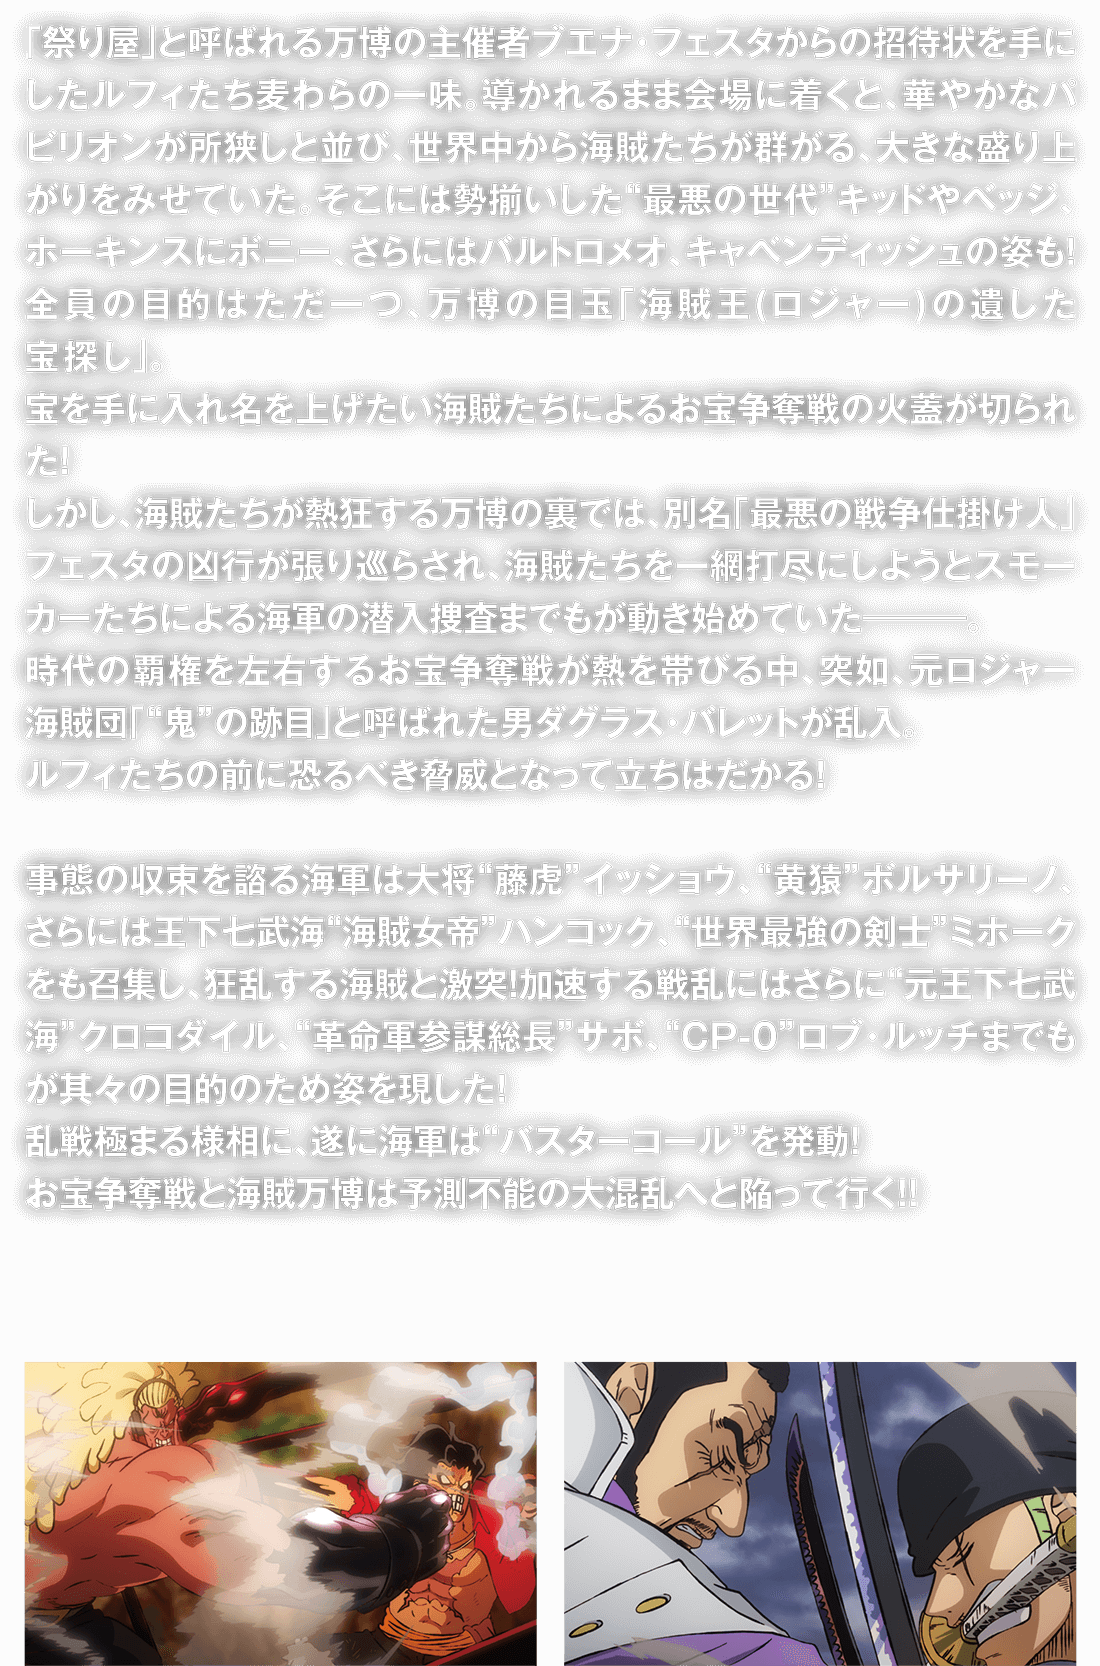 Story ストーリー 劇場版 One Piece Stampede 公式サイト